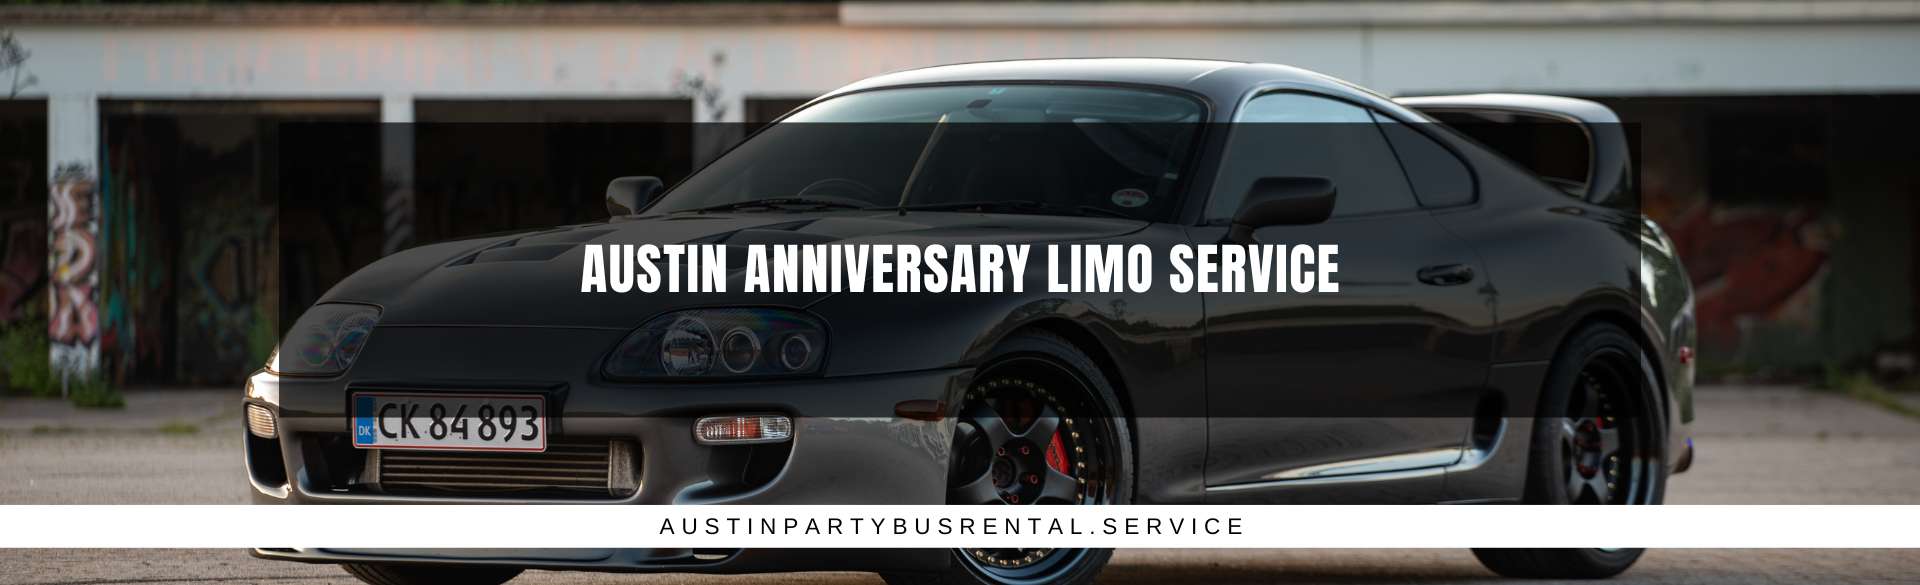 Austin Anniversary Limo Service